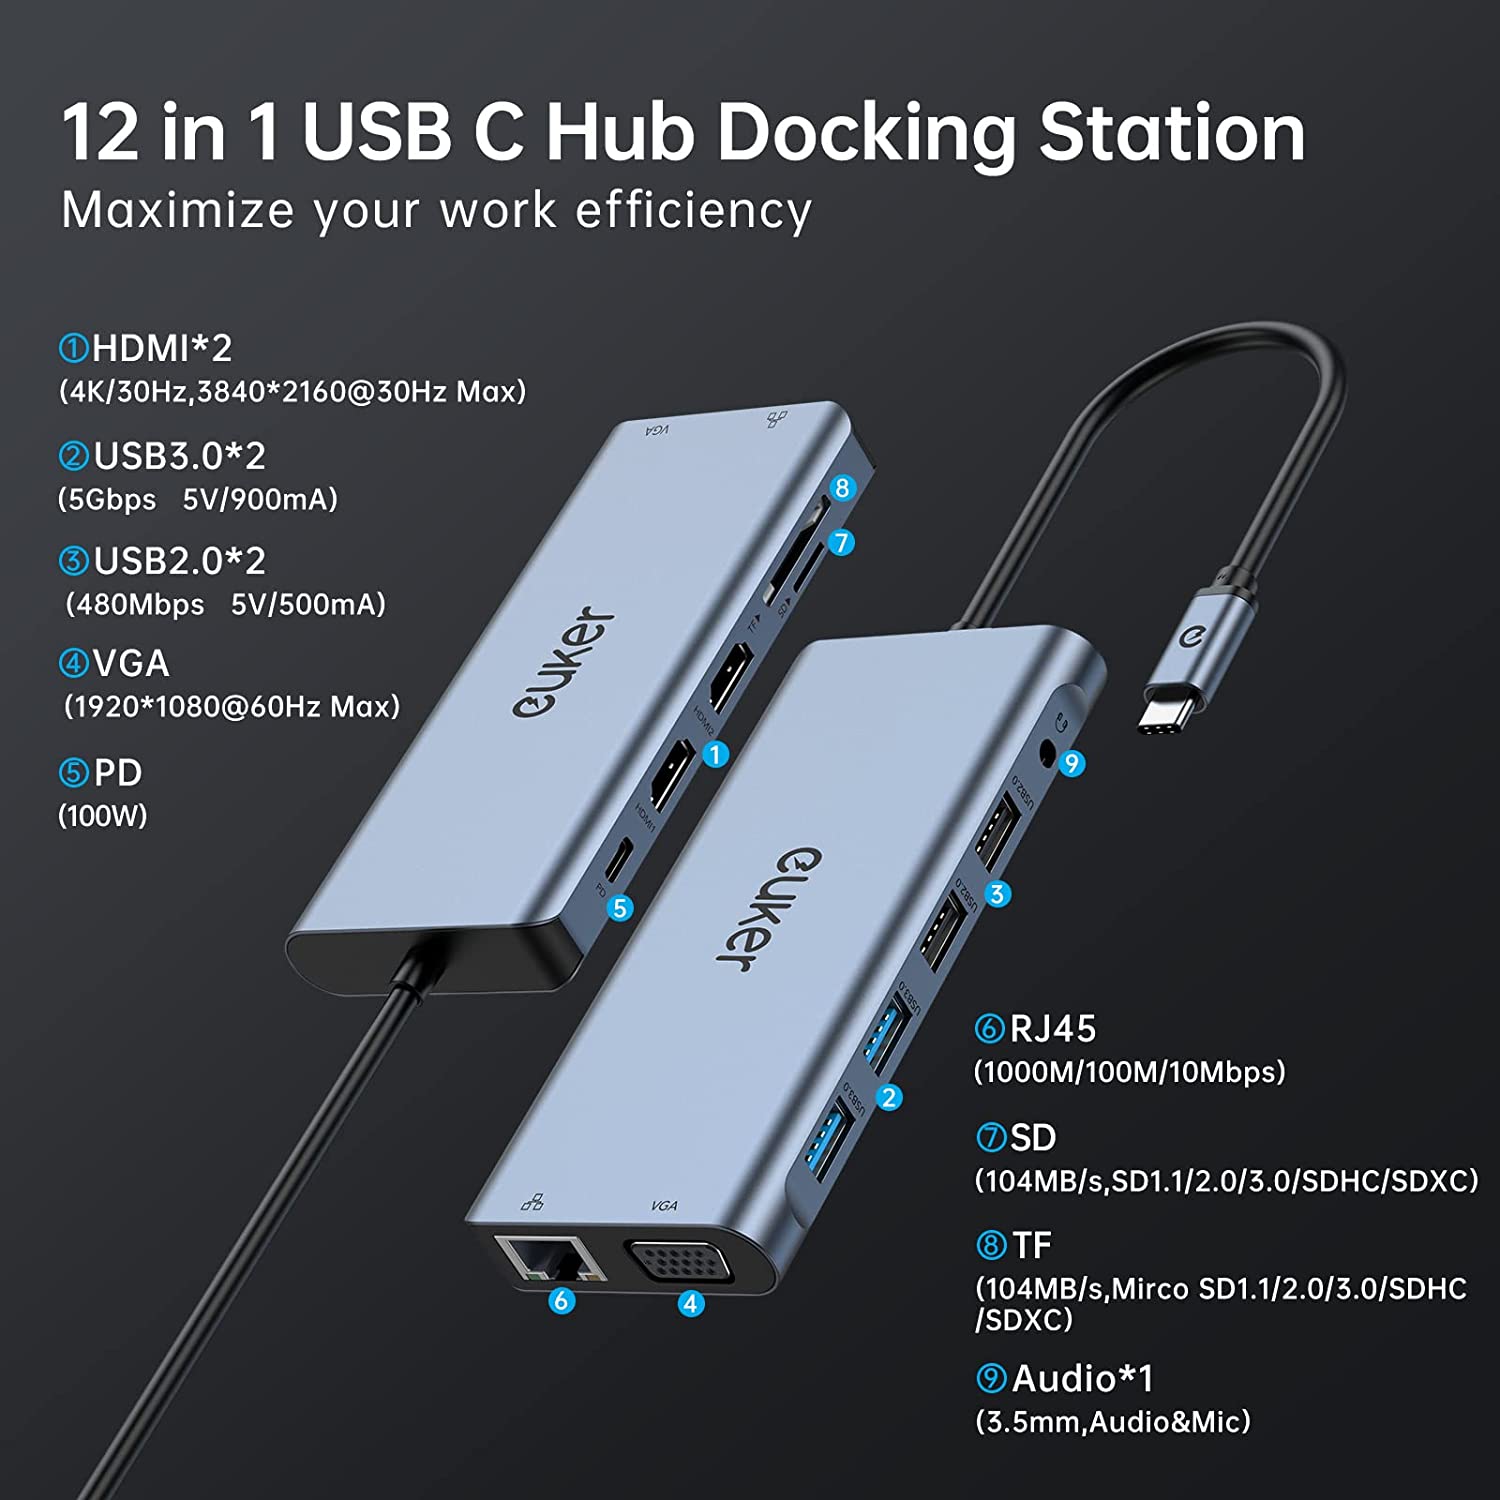 12 in 1 USB C Hub Docking Station